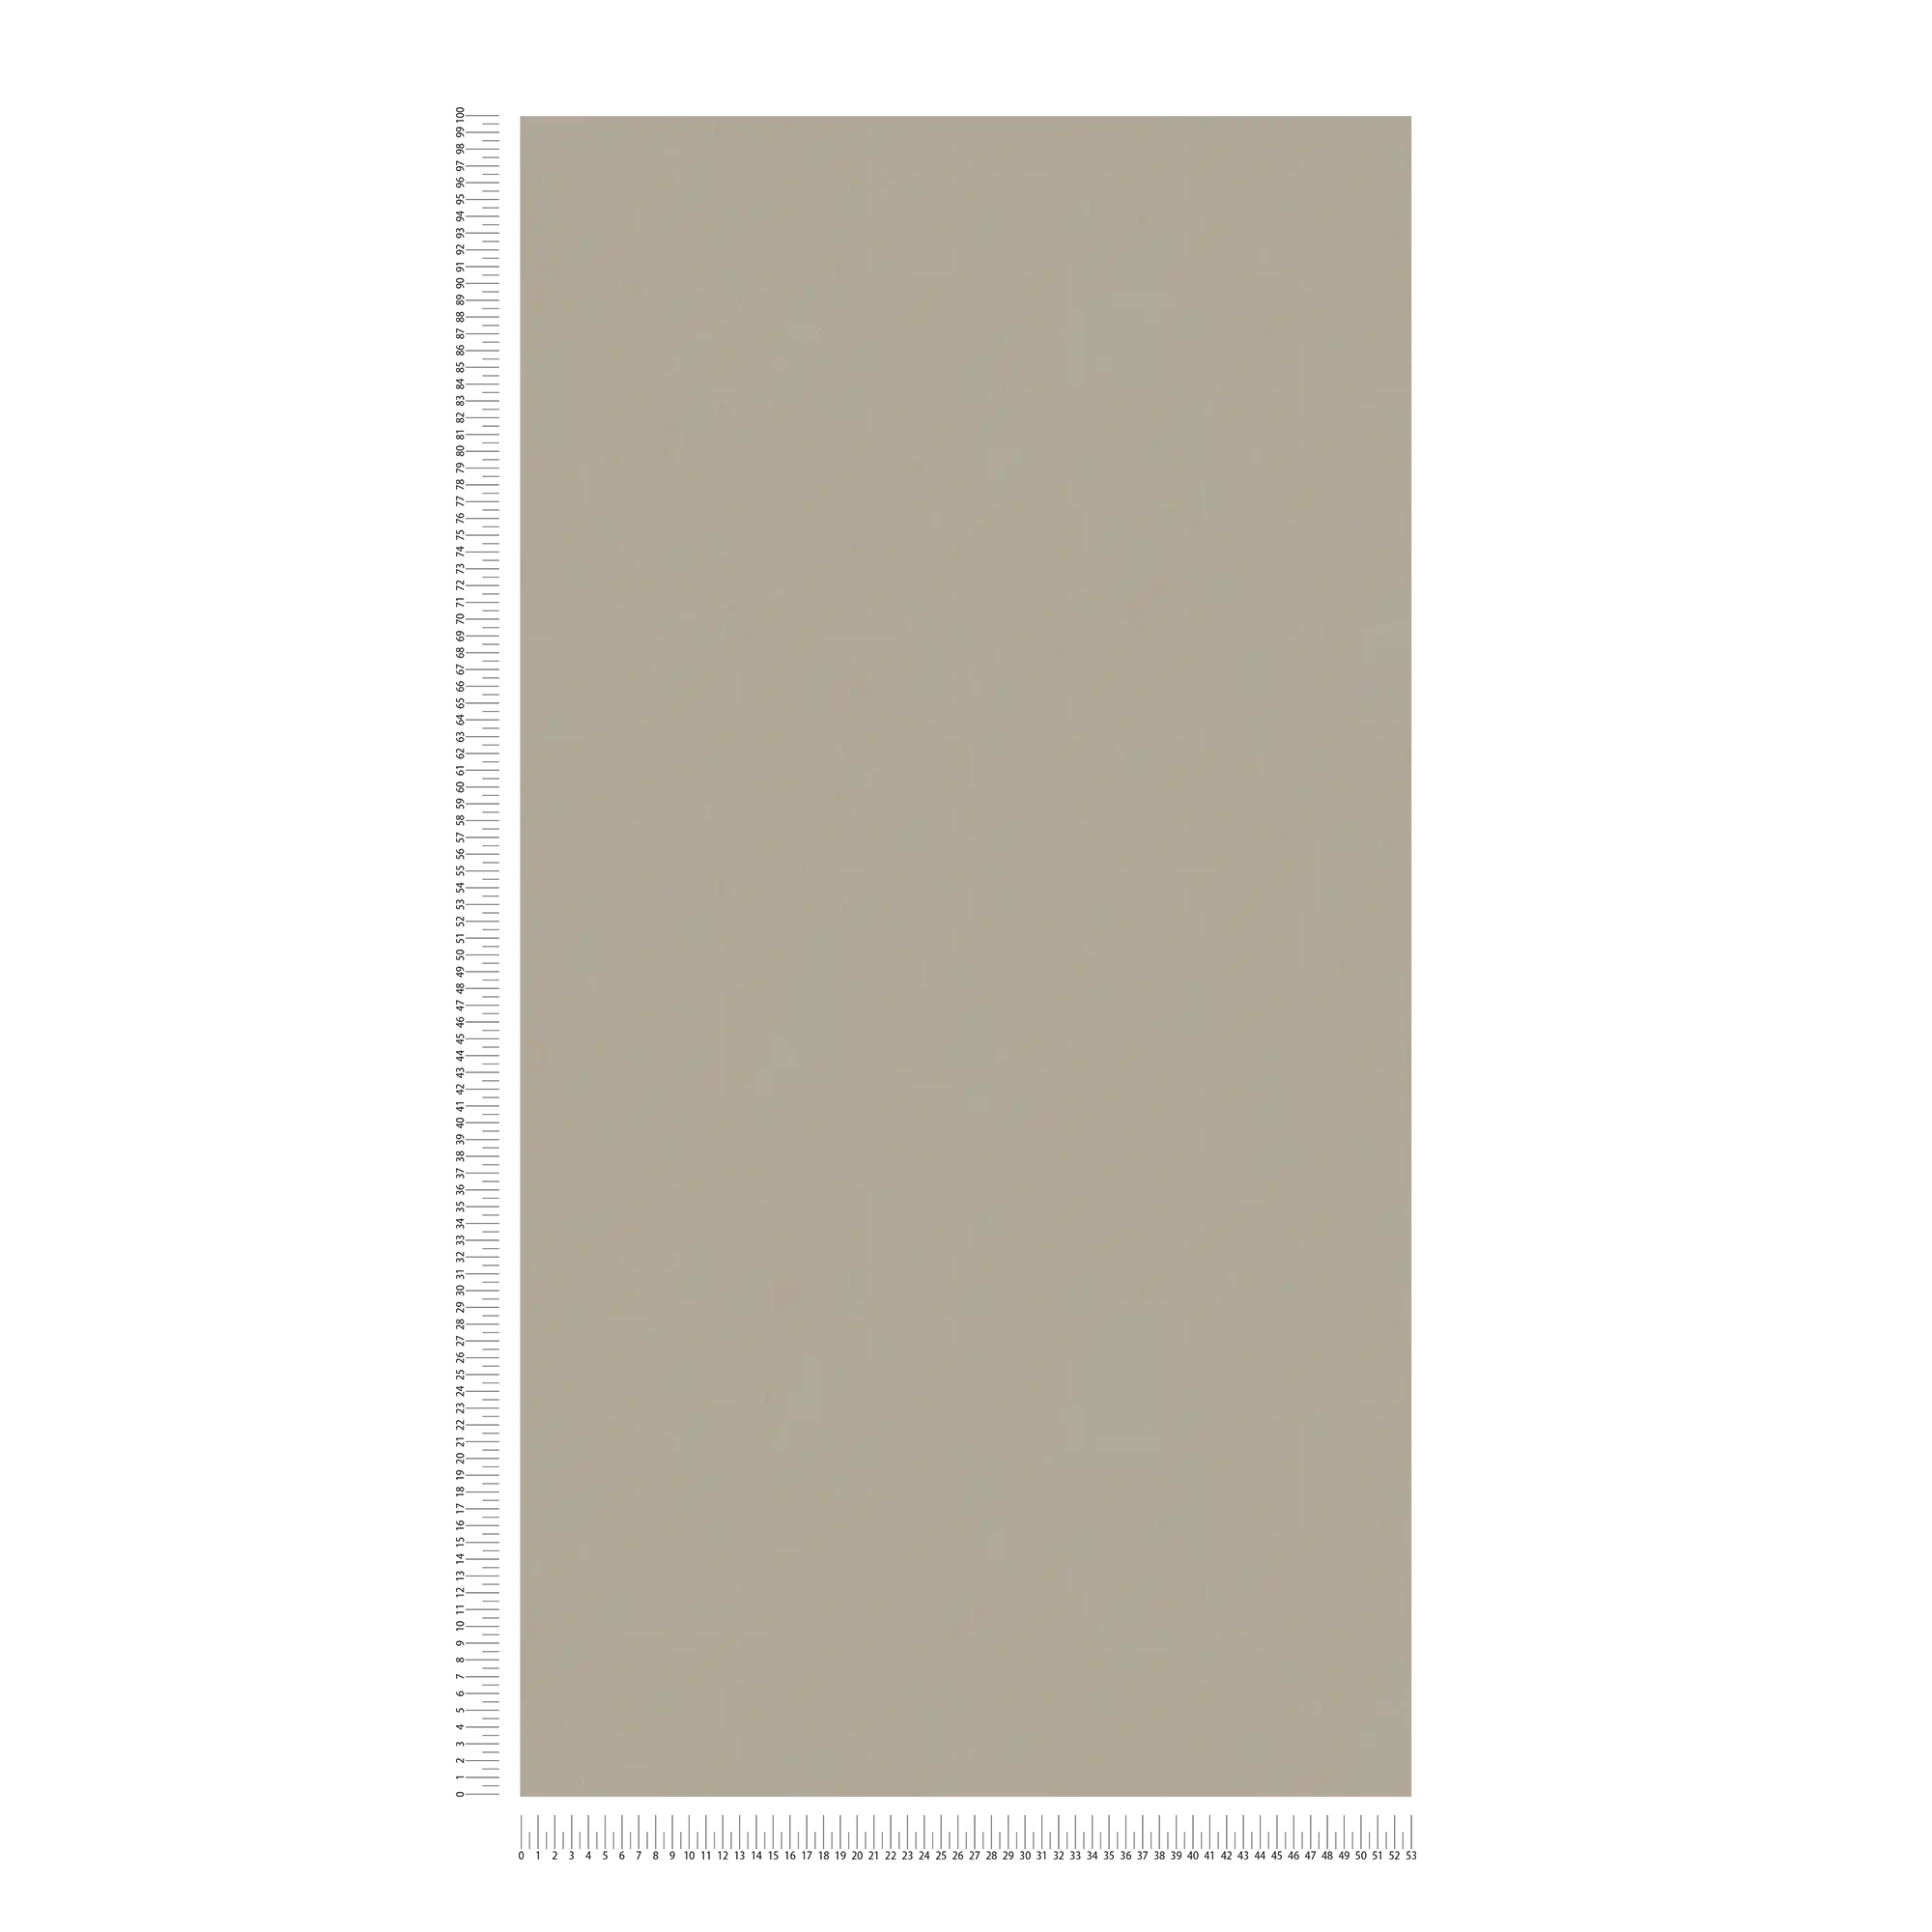             Non-woven wallpaper plain, matt with smooth surface - brown
        